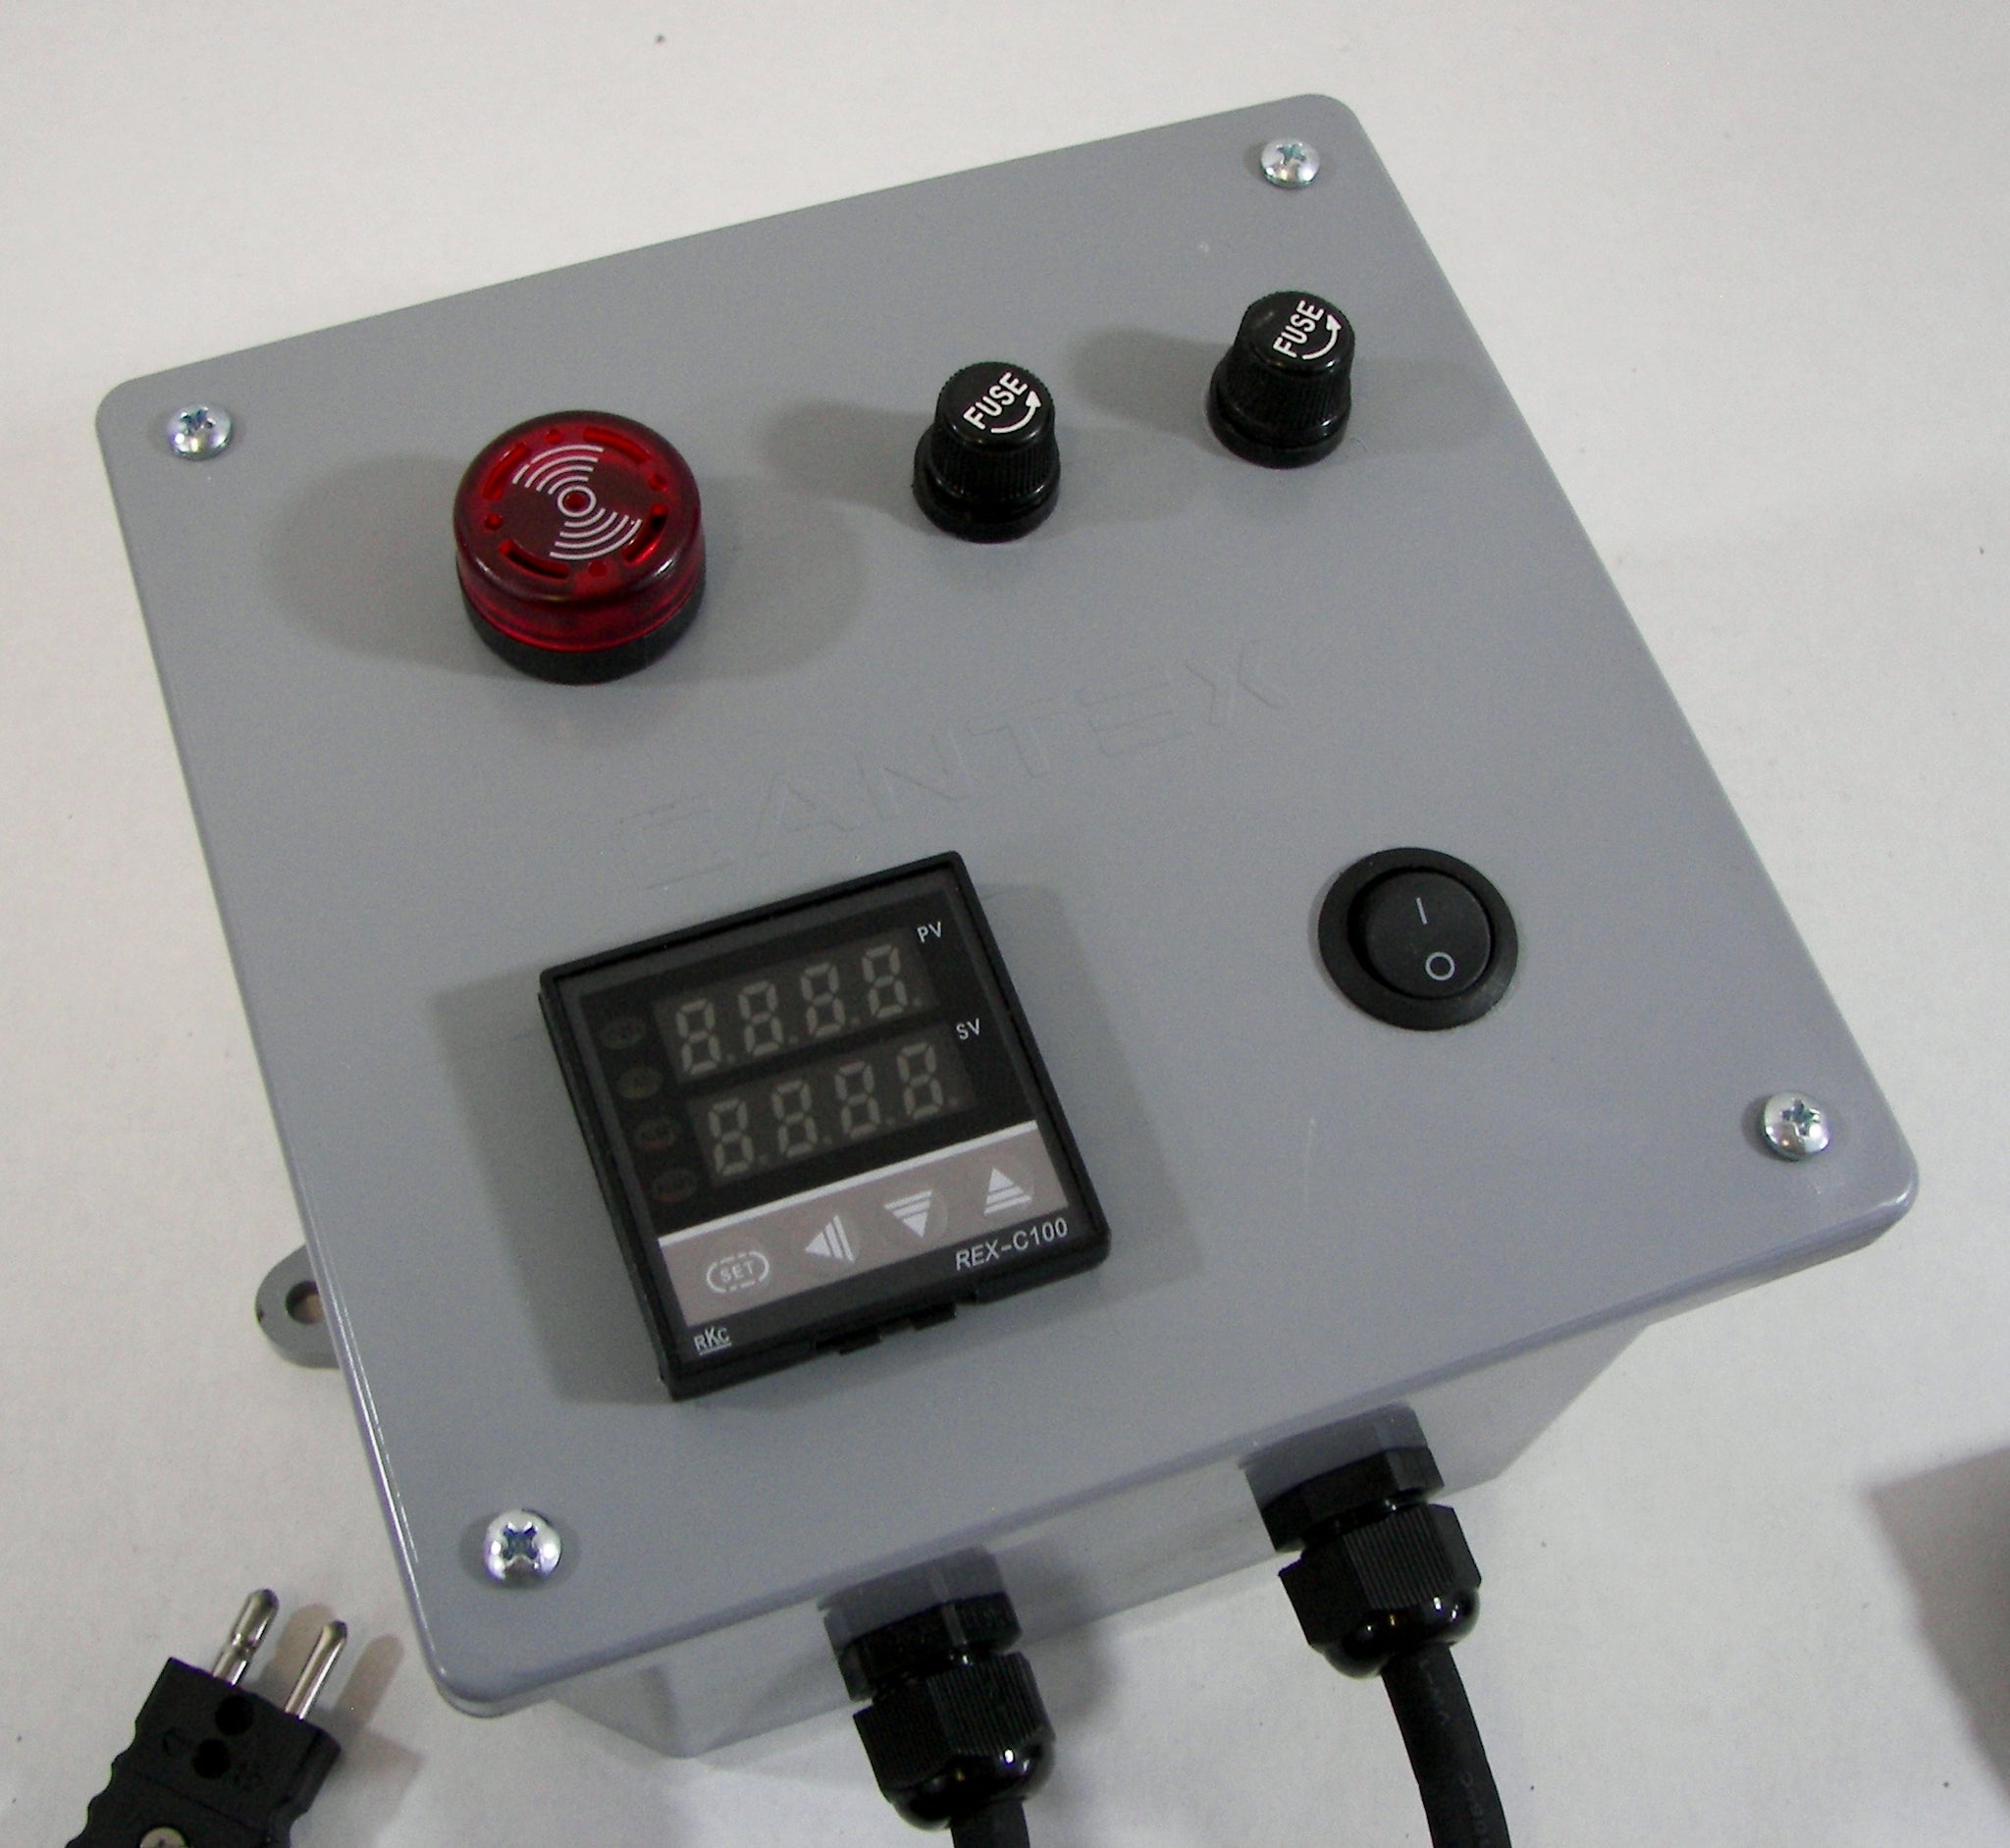 Battery Temperature Sensor for VRC-200 (VRC-100) Controller